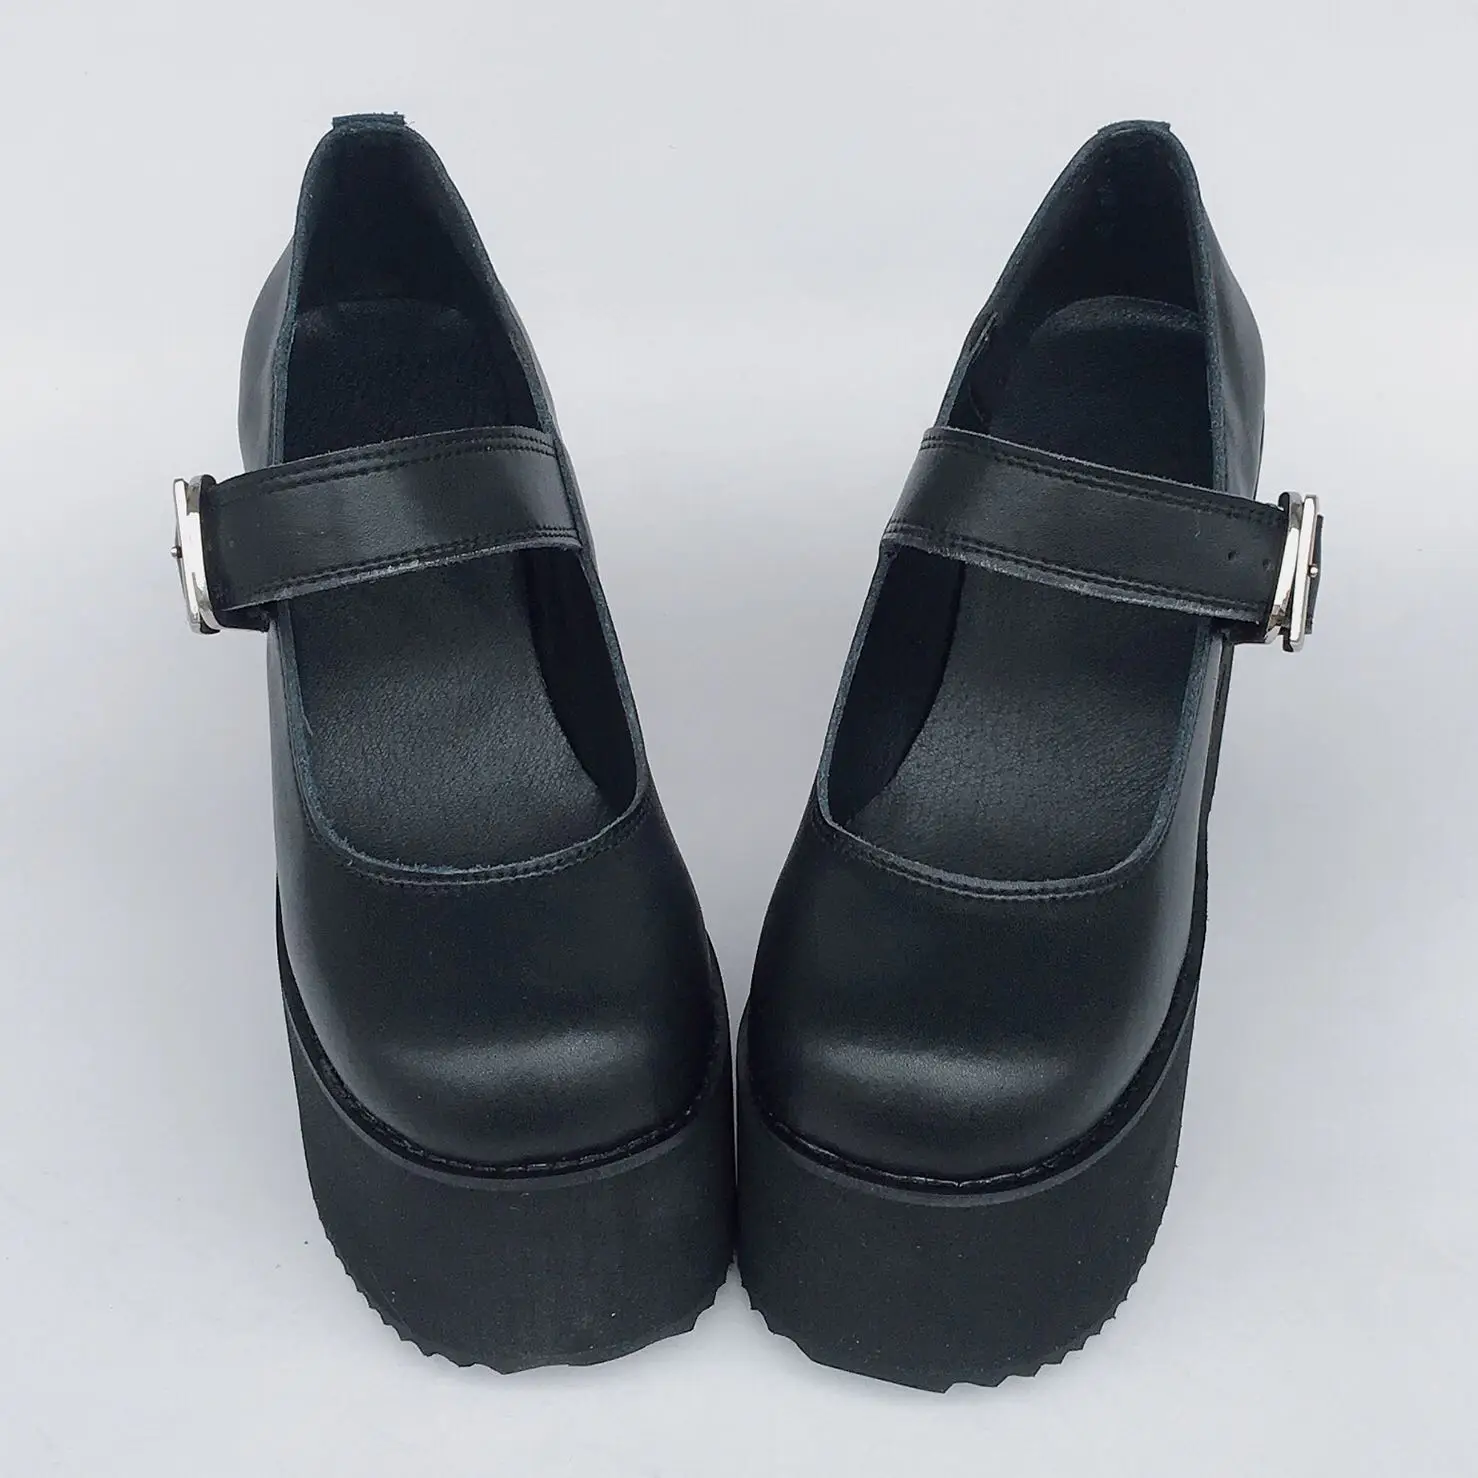 10cm Black Genuine Leather High Heel Platform Wedge Shoes Buckle Strap Pumps for Women